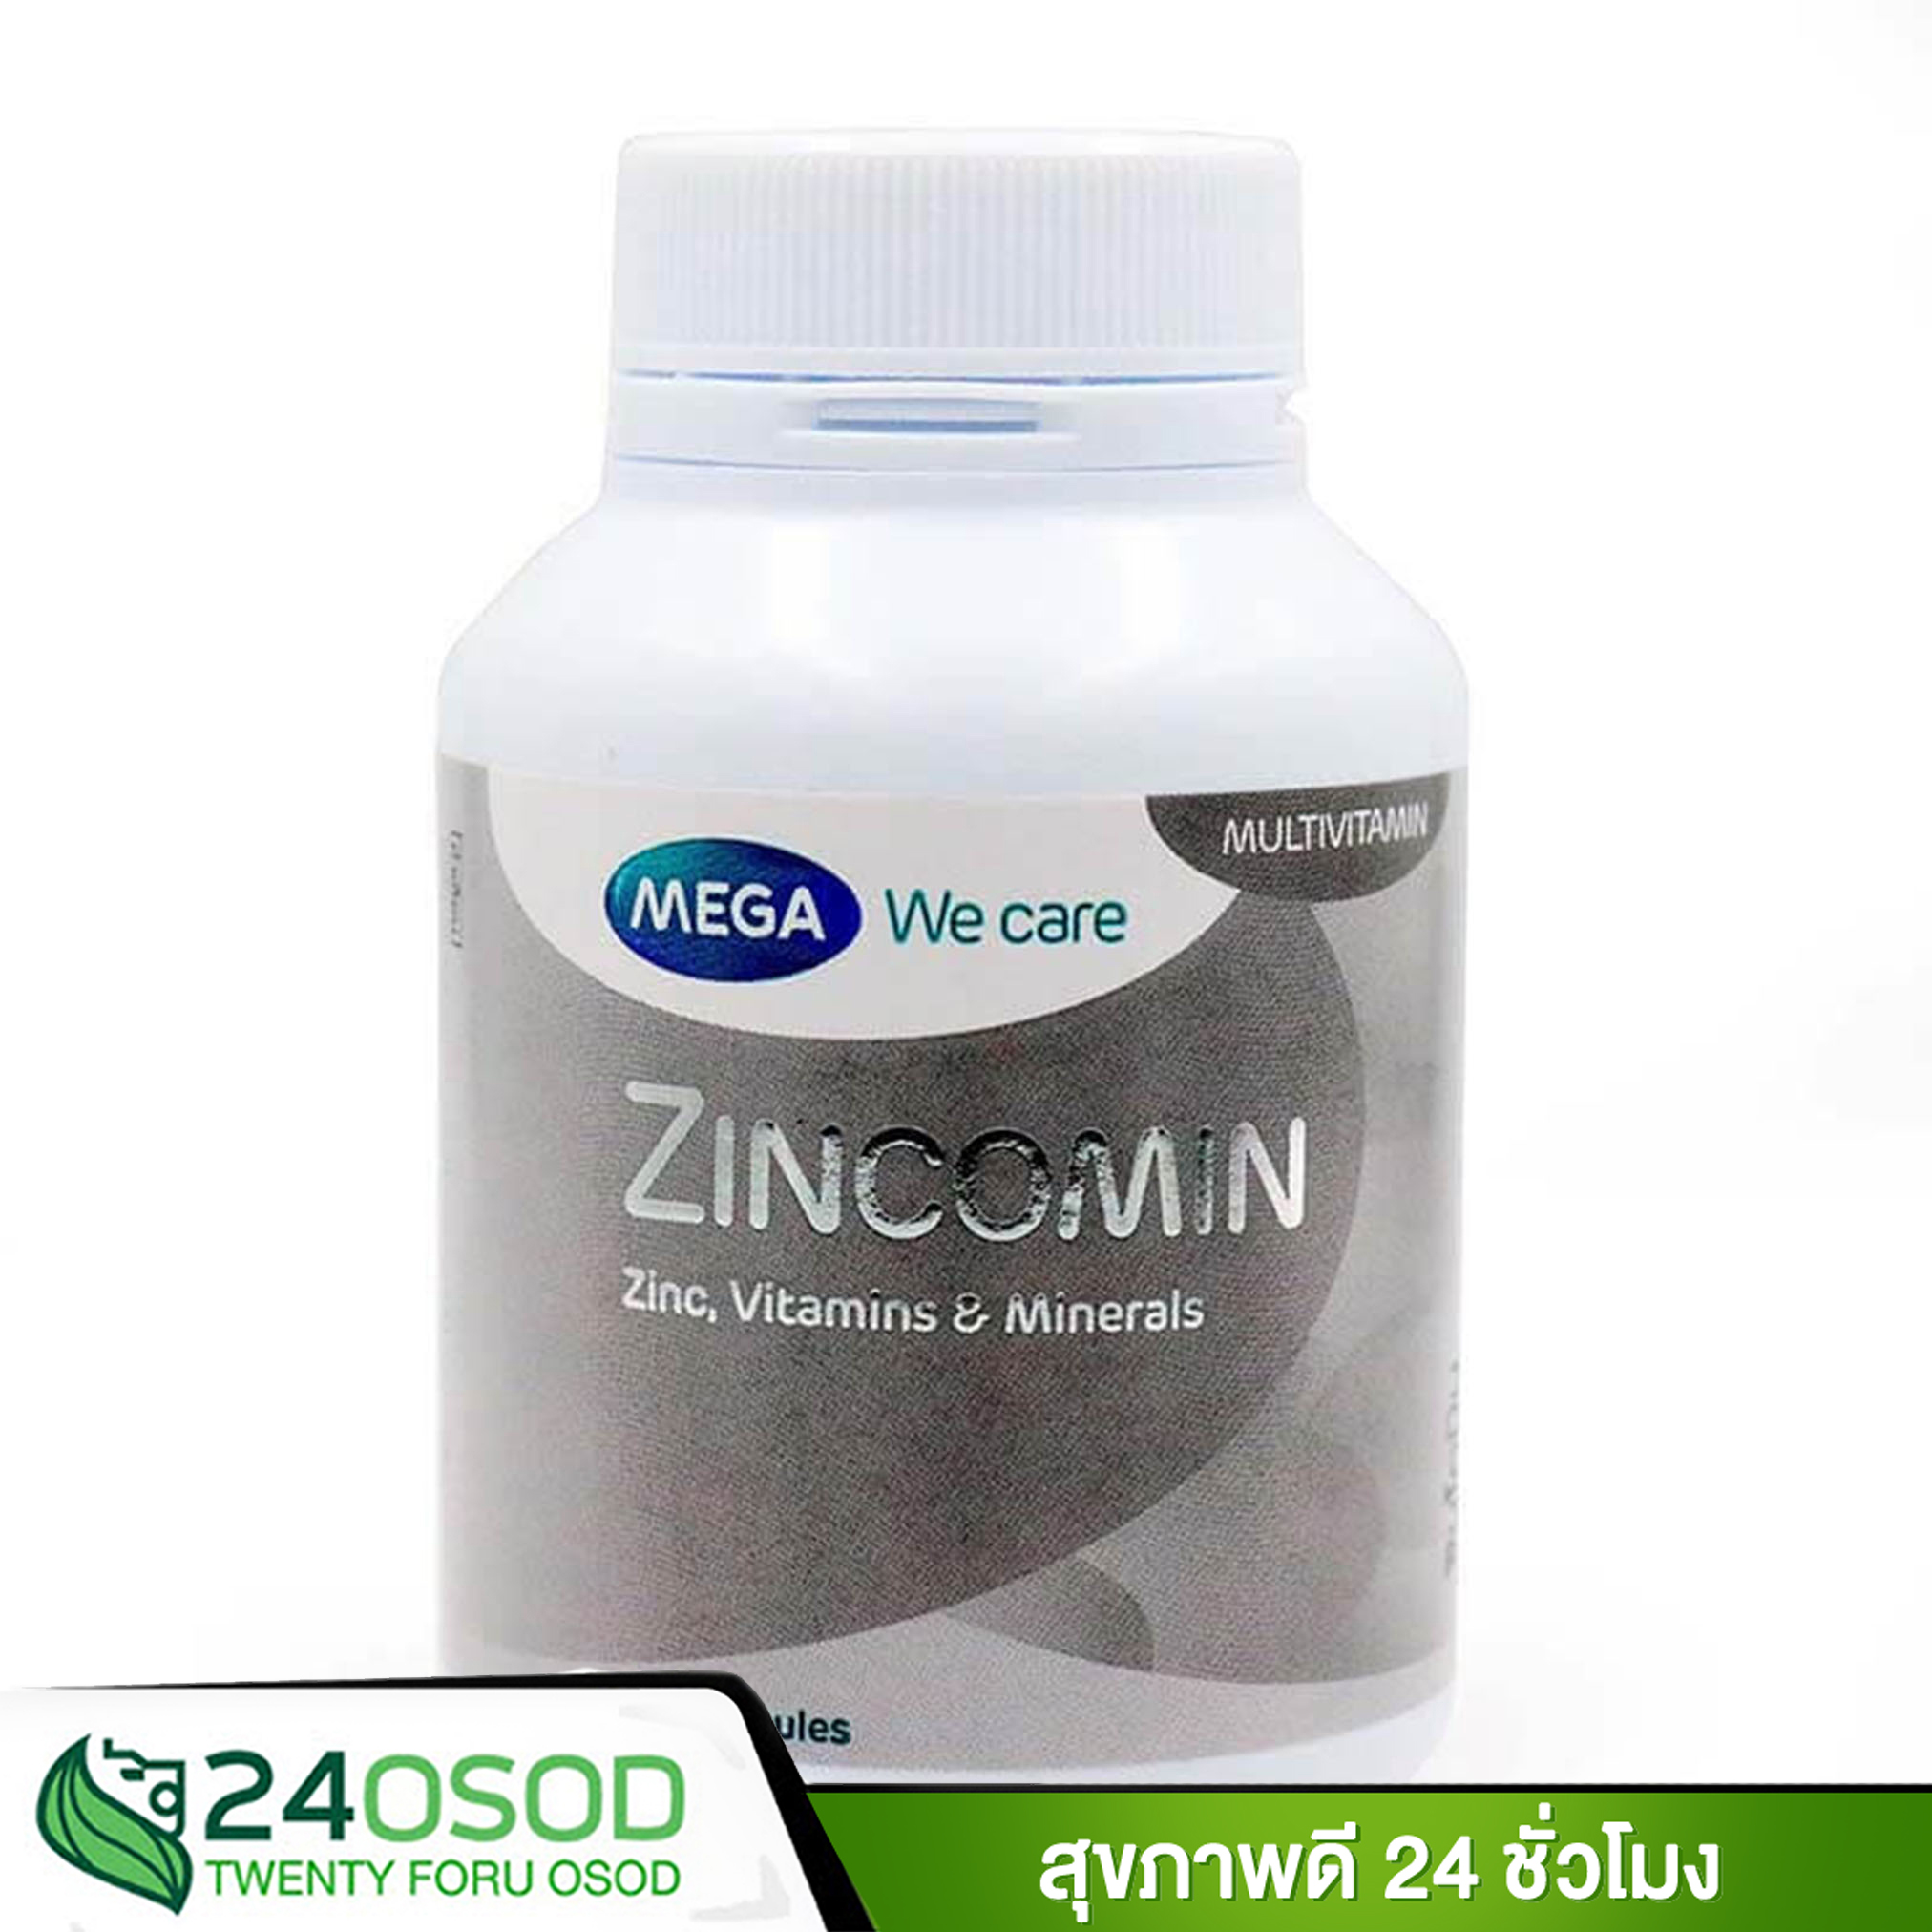 Mega We Care Zincomin 60 แคปซูล เมก้า วีแคร์ ซินโคมิน แร่ธาตุสังกะสี เพื่อสุขภาพผมและเล็บที่แข็งแรง ซิงค์ 60 เม็ด